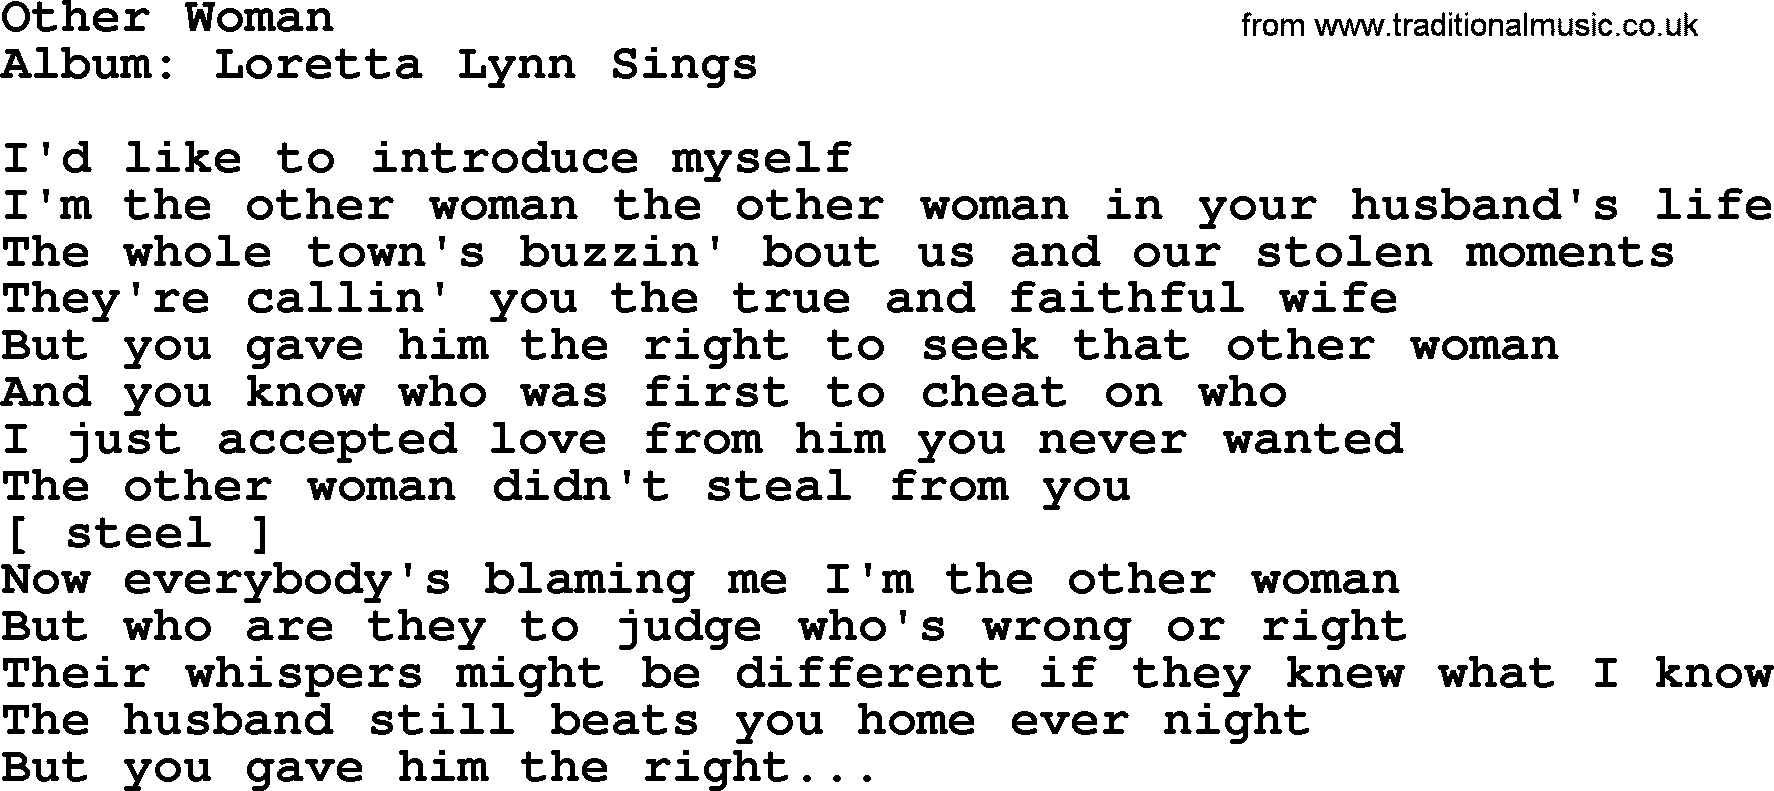 Loretta Lynn song: Other Woman lyrics